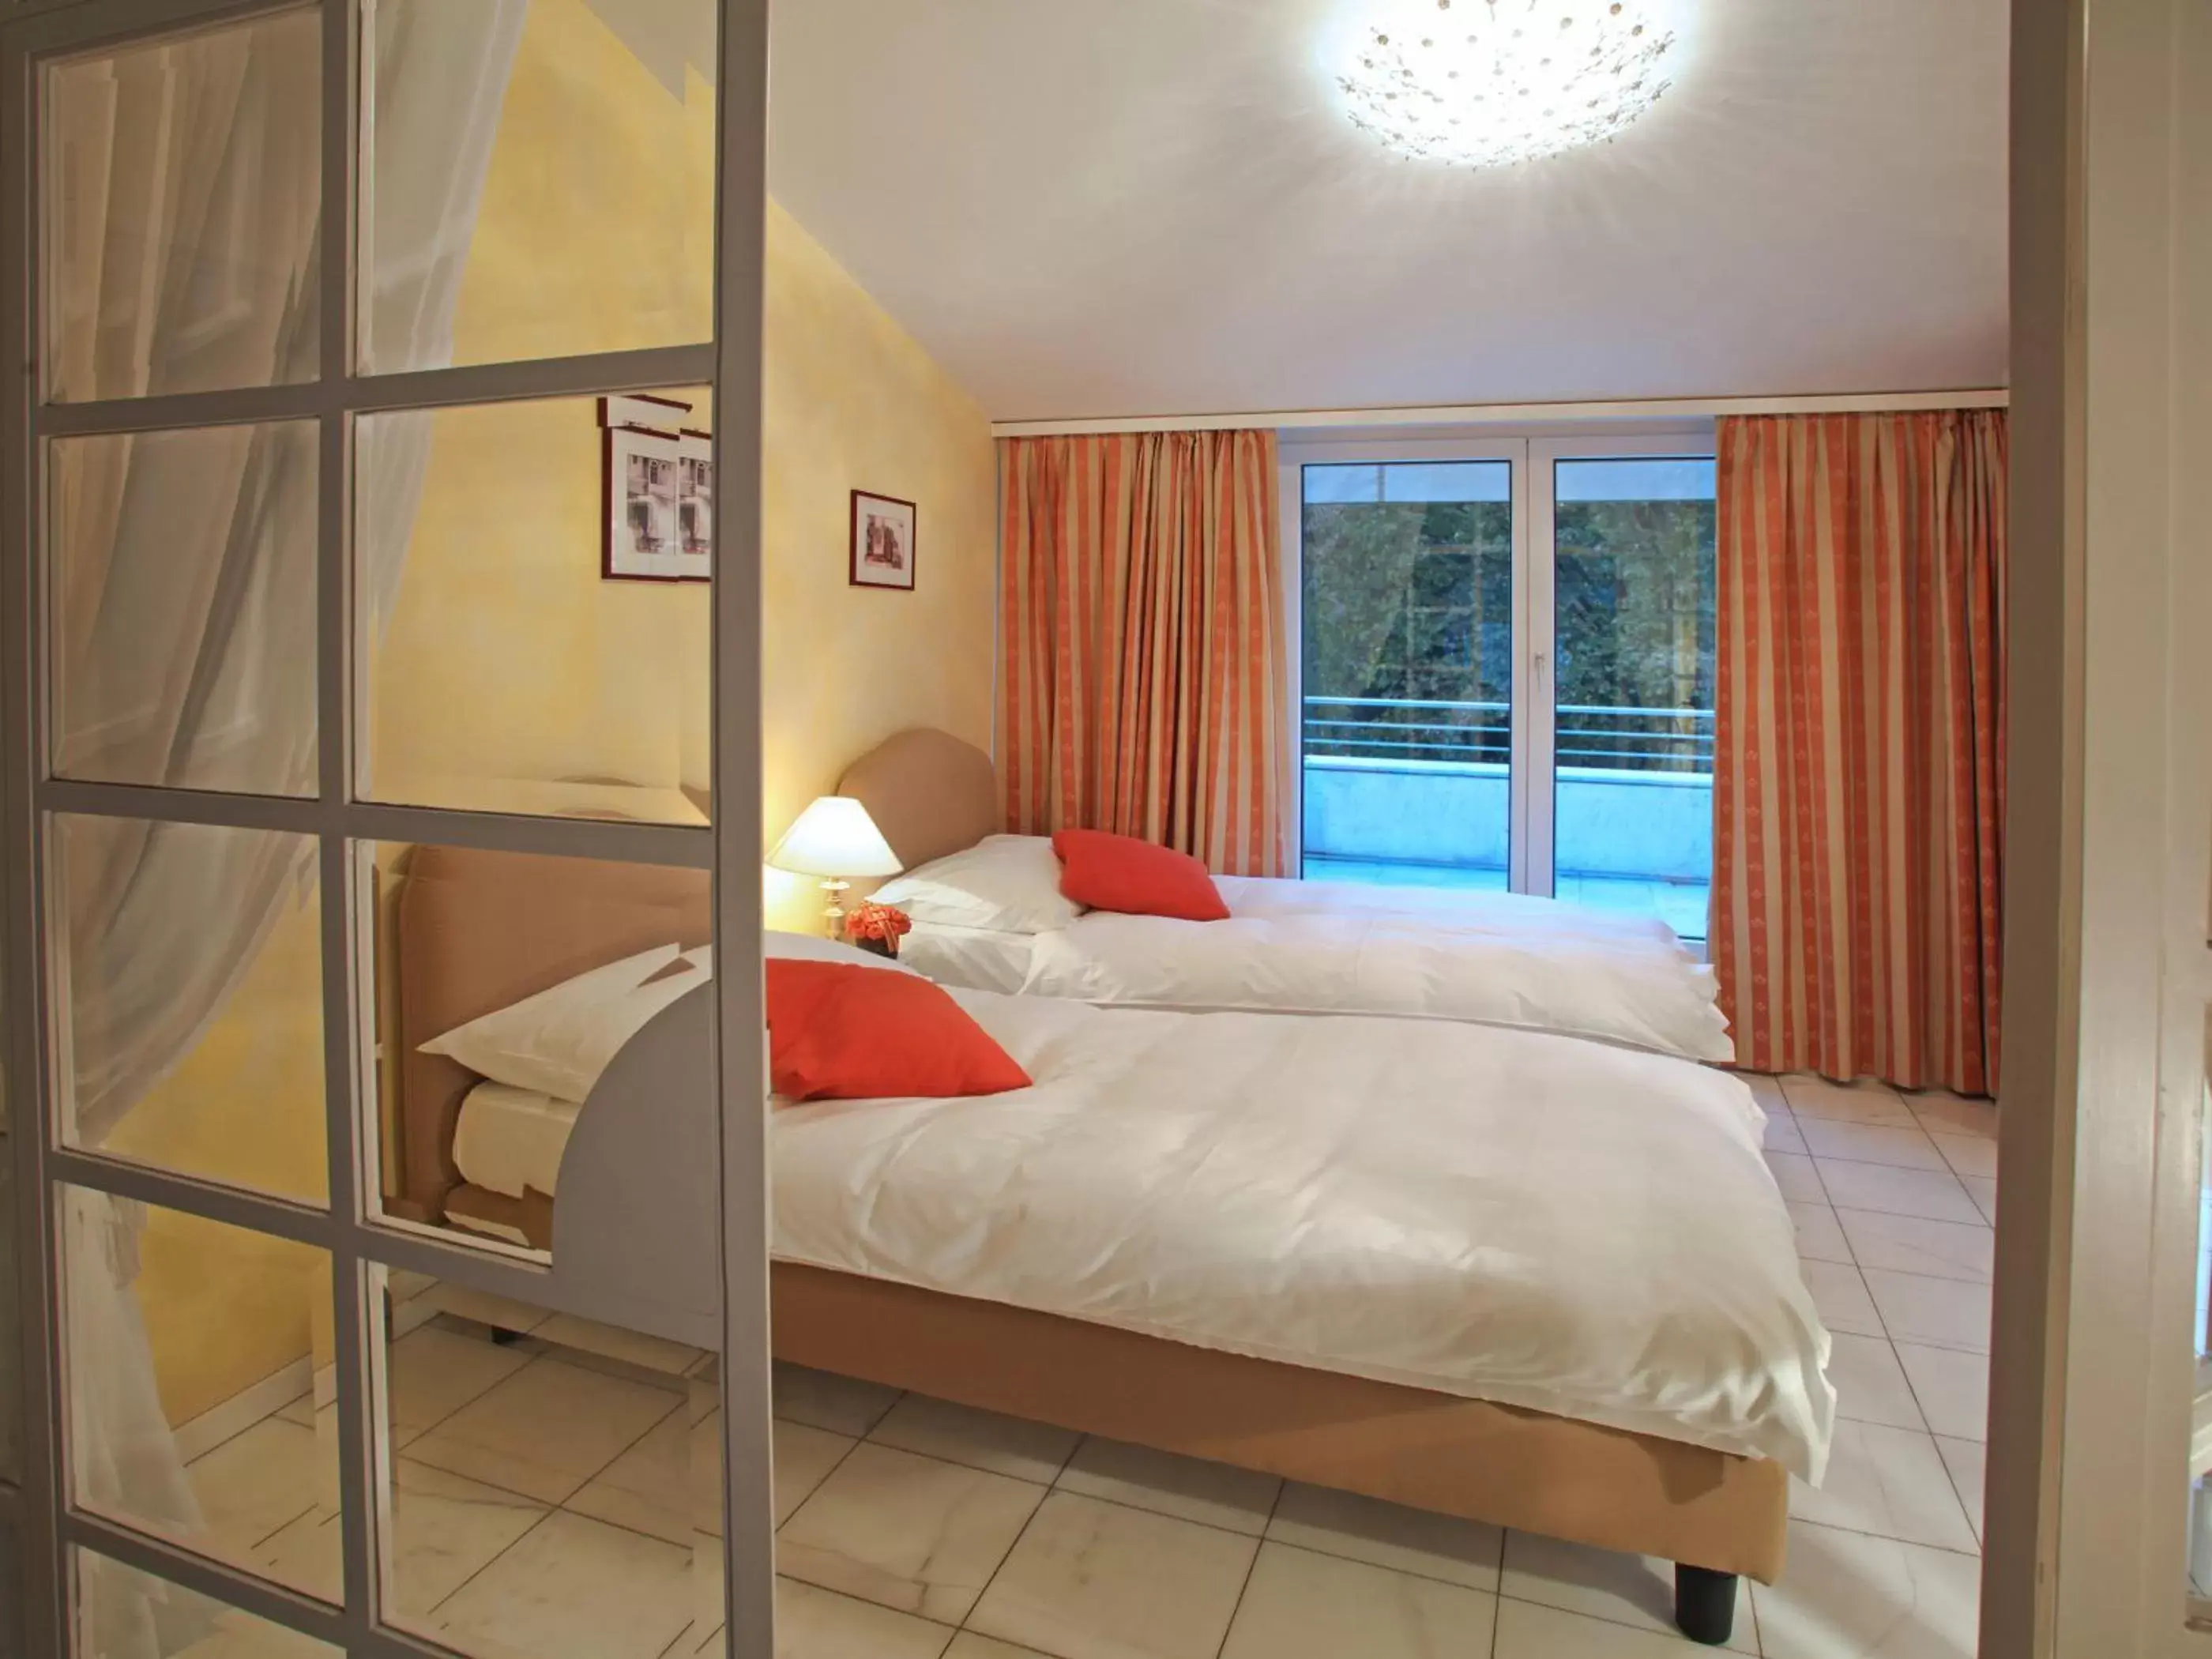 Bedroom in Villa Sassa Hotel, Residence & Spa - Ticino Hotels Group